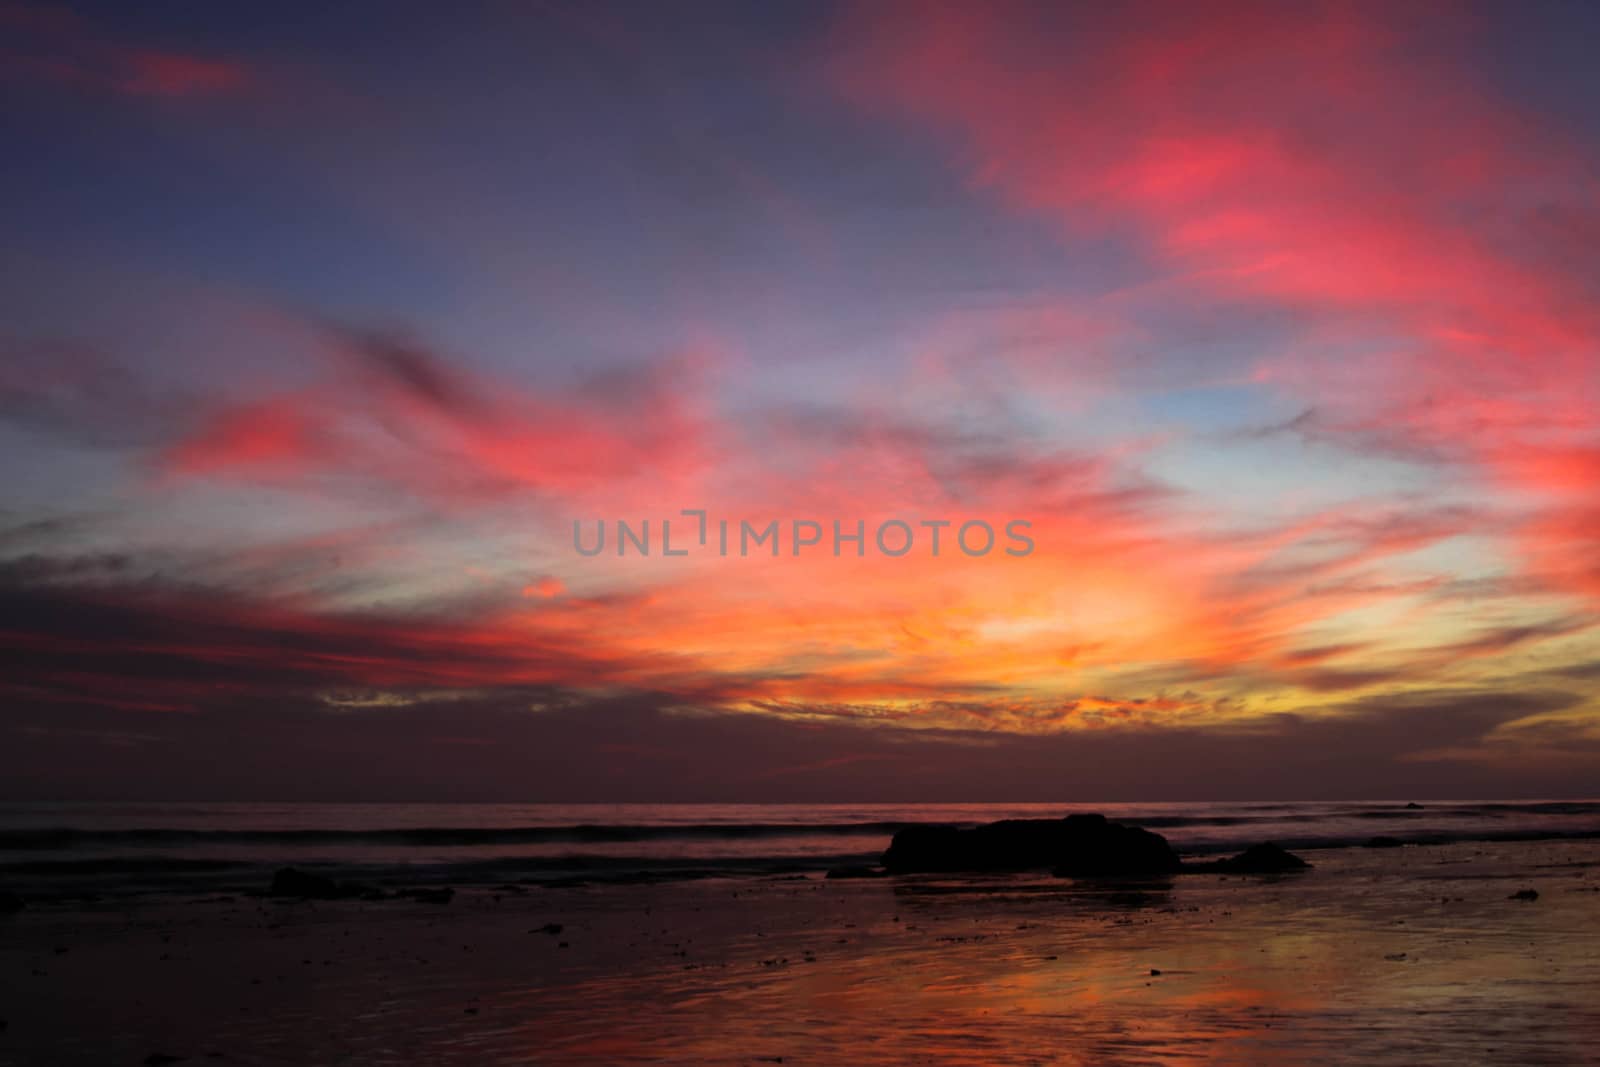 Sunset at Handry's Beach in Santa Barbara.